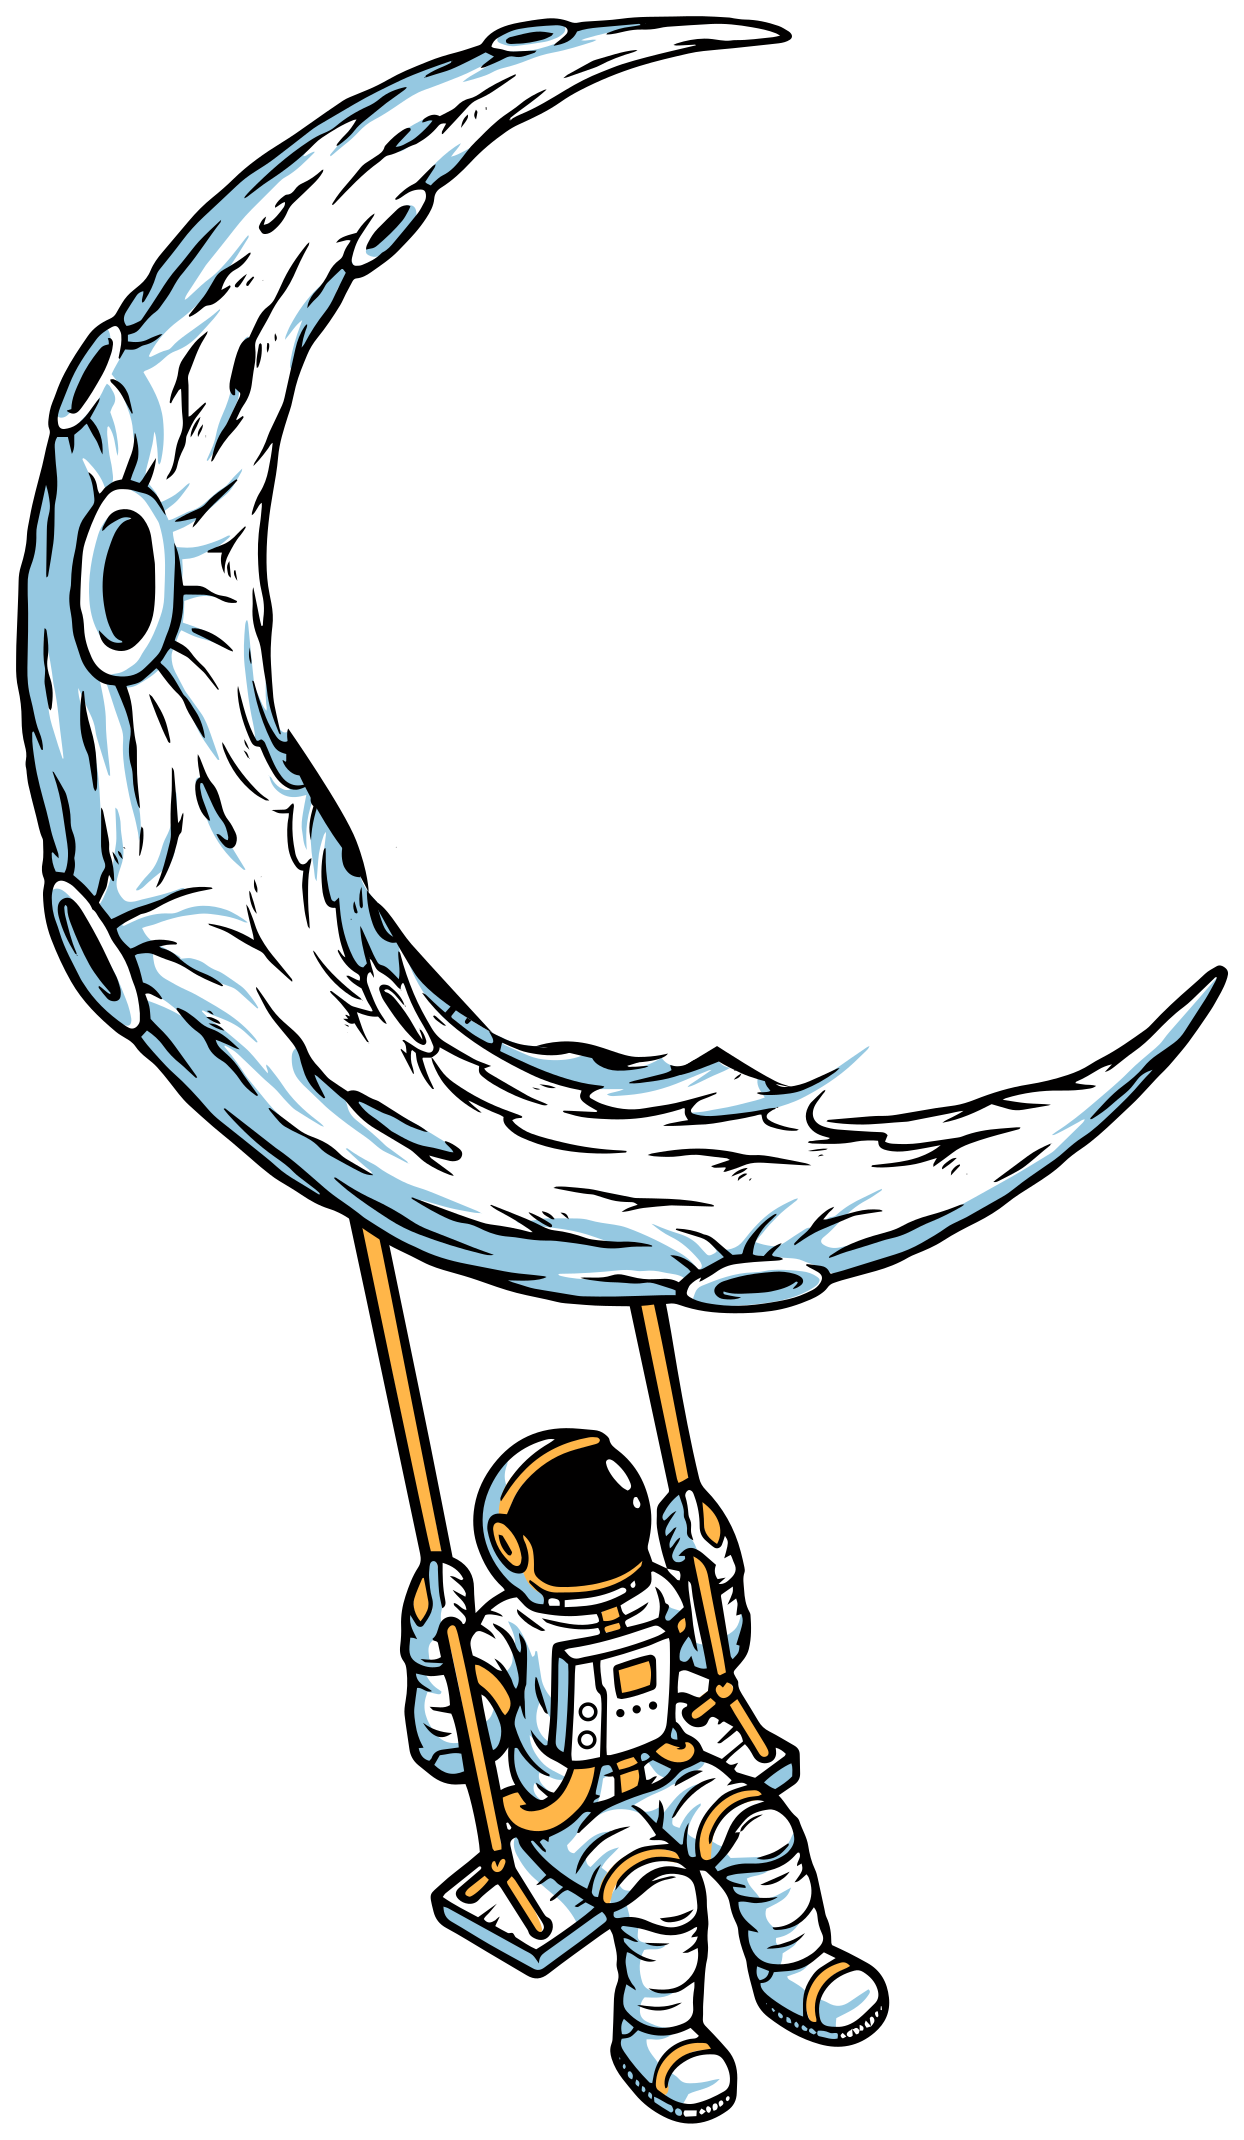 space exploration illustration